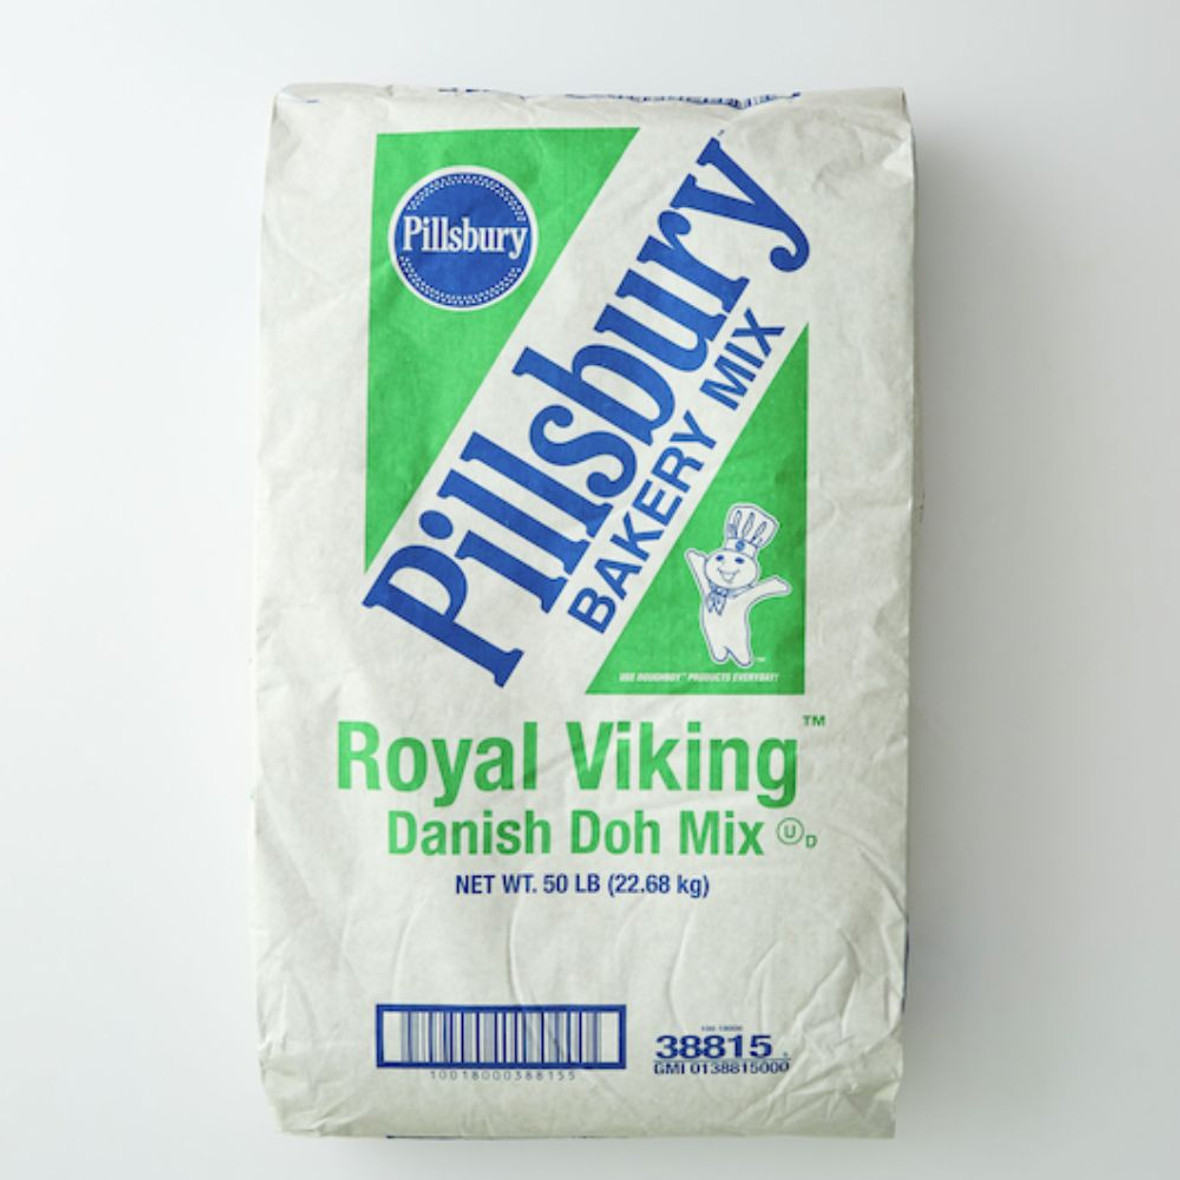 Pillsbury Royal Viking Danish Dough Mix